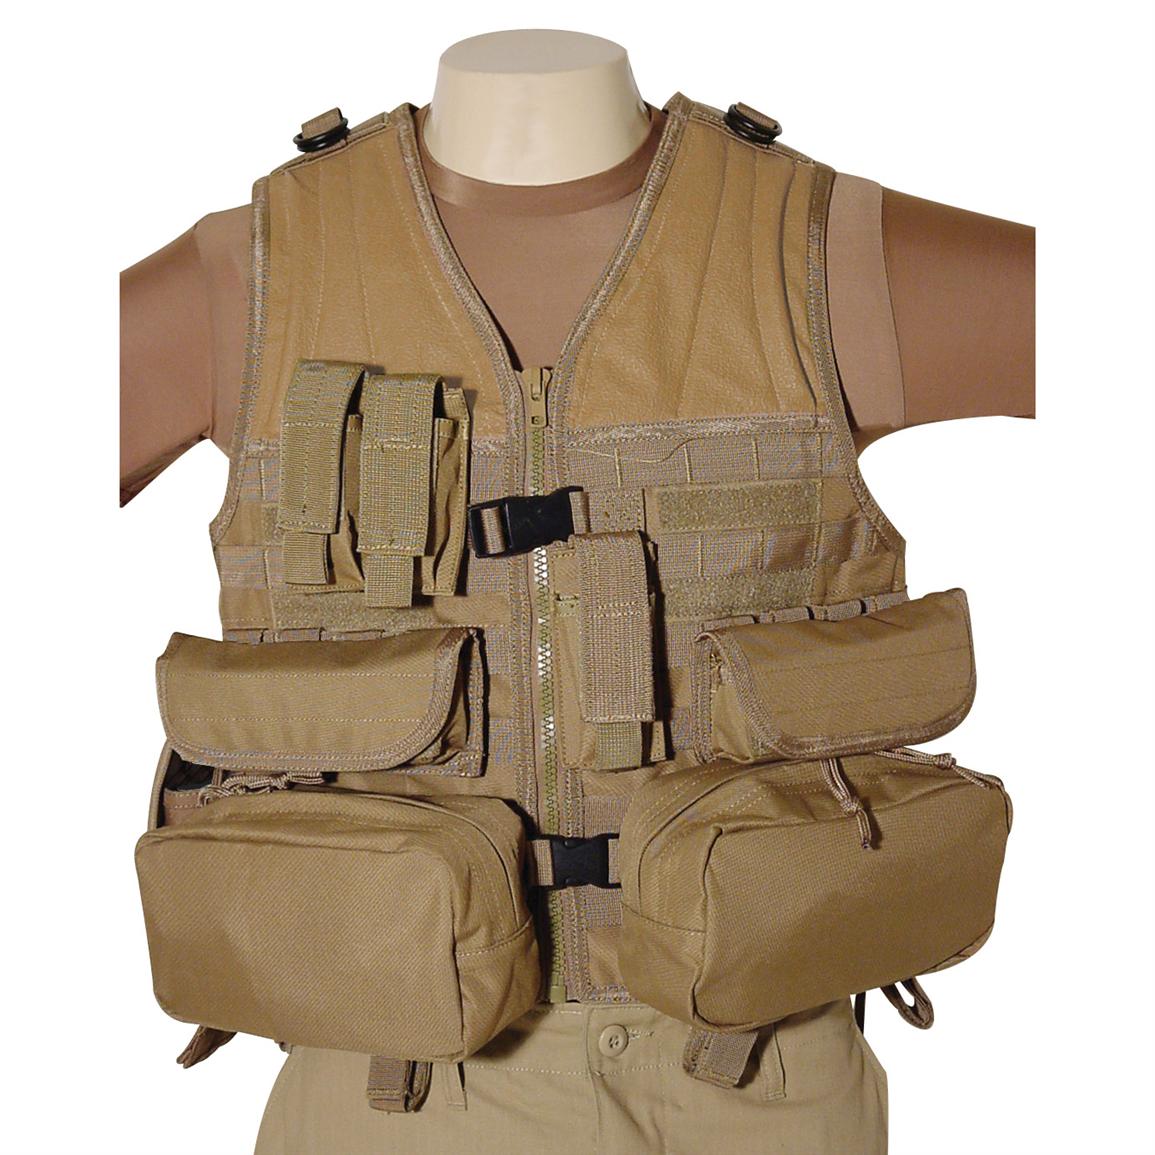 Shotgun Entry Combo Vest - 131423, Tactical Clothing at Sportsman's Guide